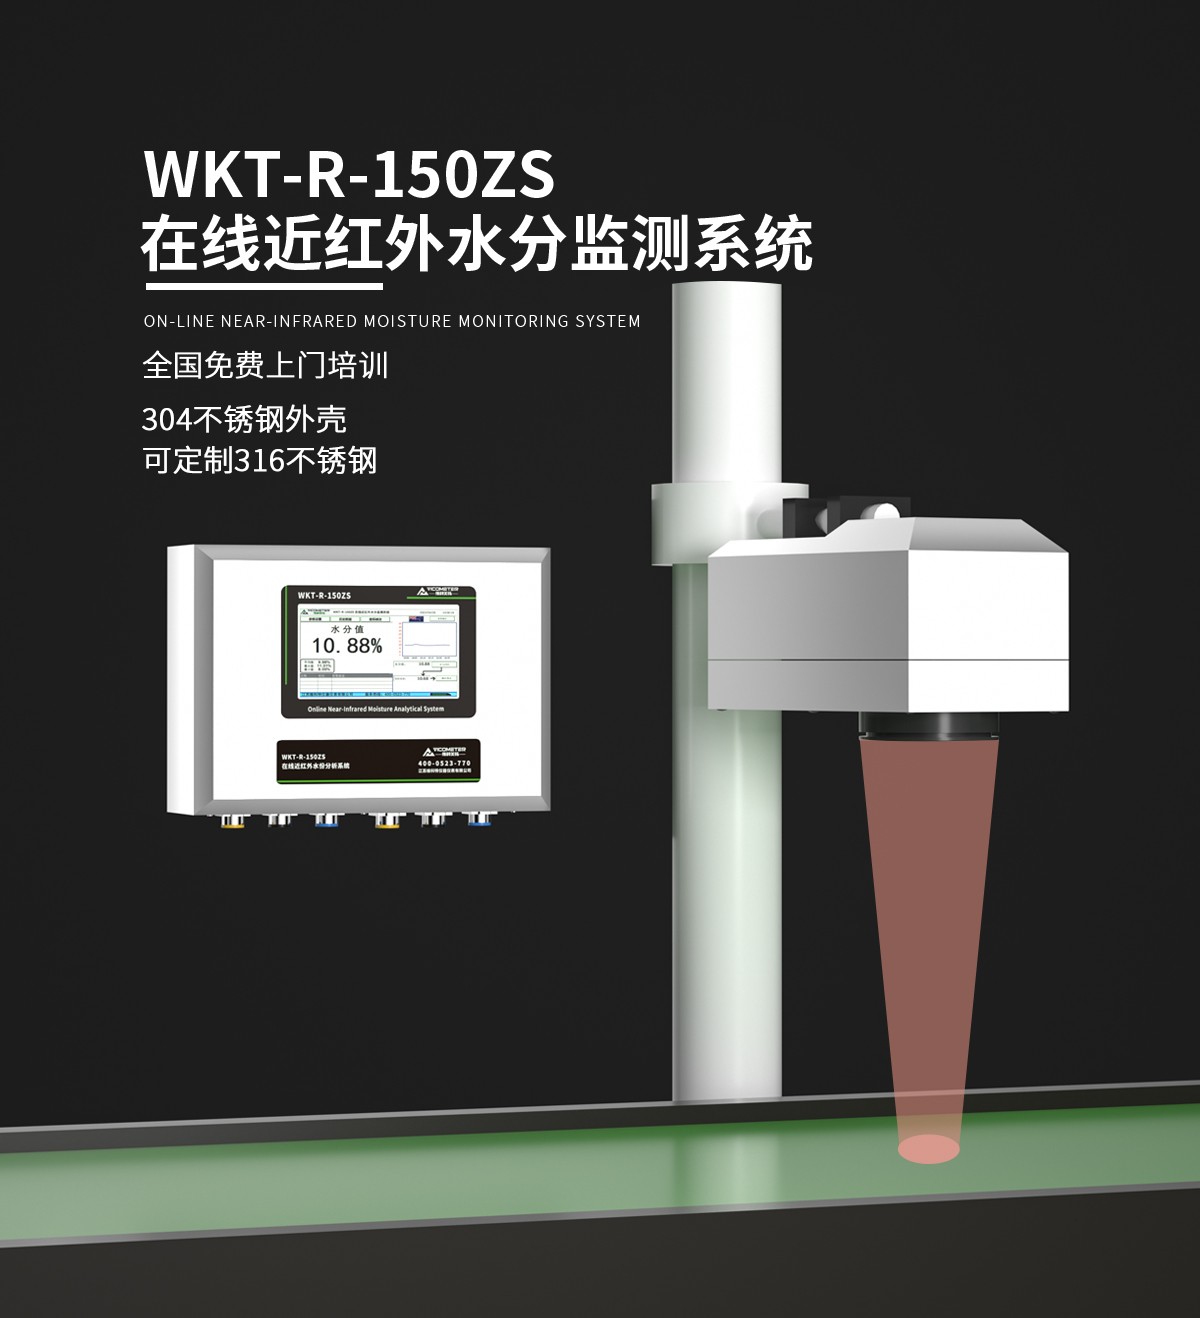 WKT-R-150ZS-SS在线近红外水分仪（不锈钢）